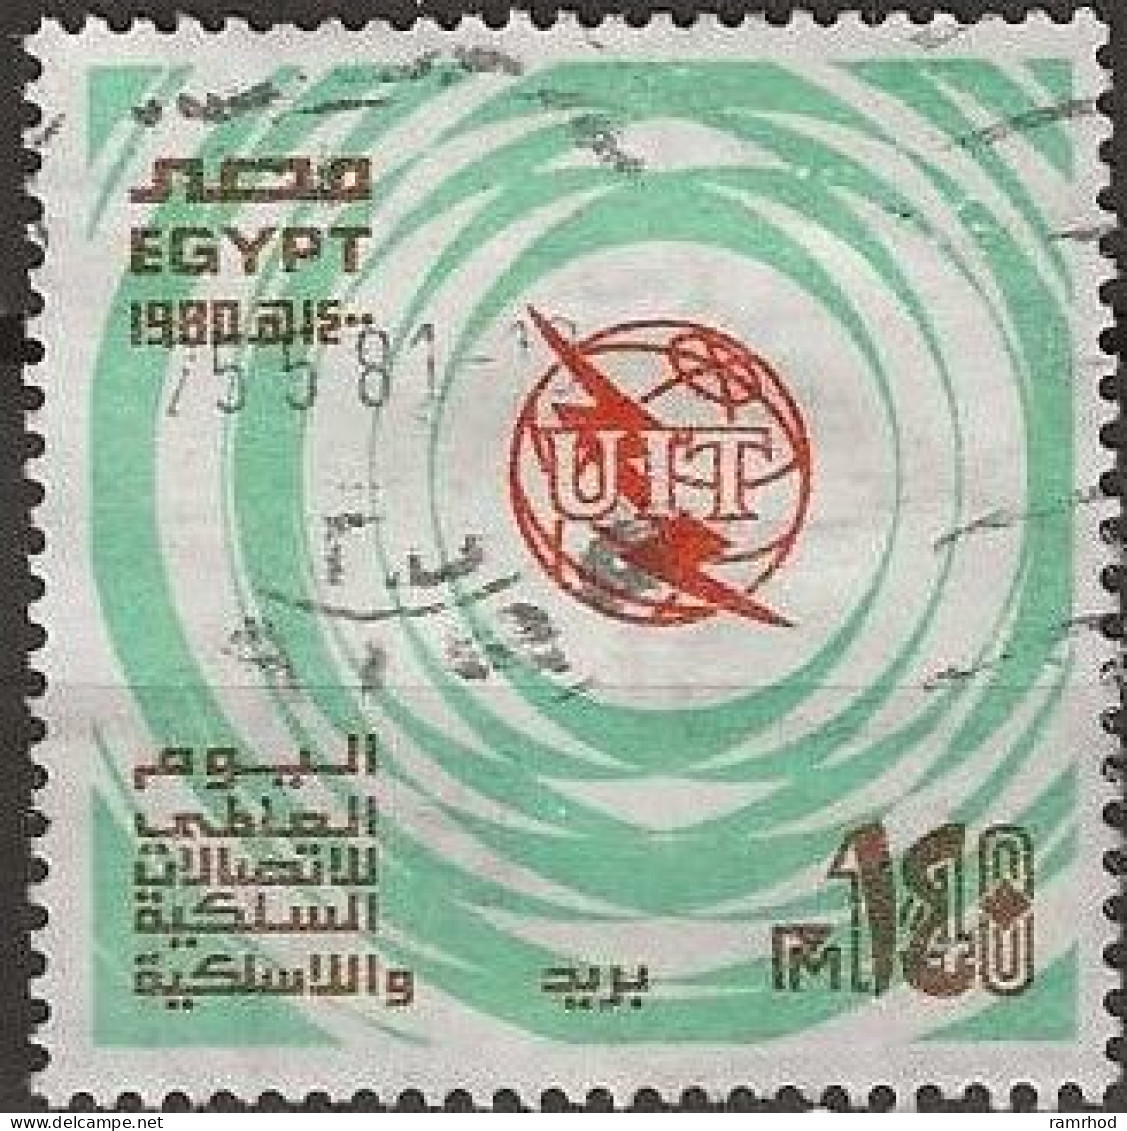 EGYPT 1980 United Nations Day - 140m. ITU Emblem (International Tele-communications Day) FU - Used Stamps